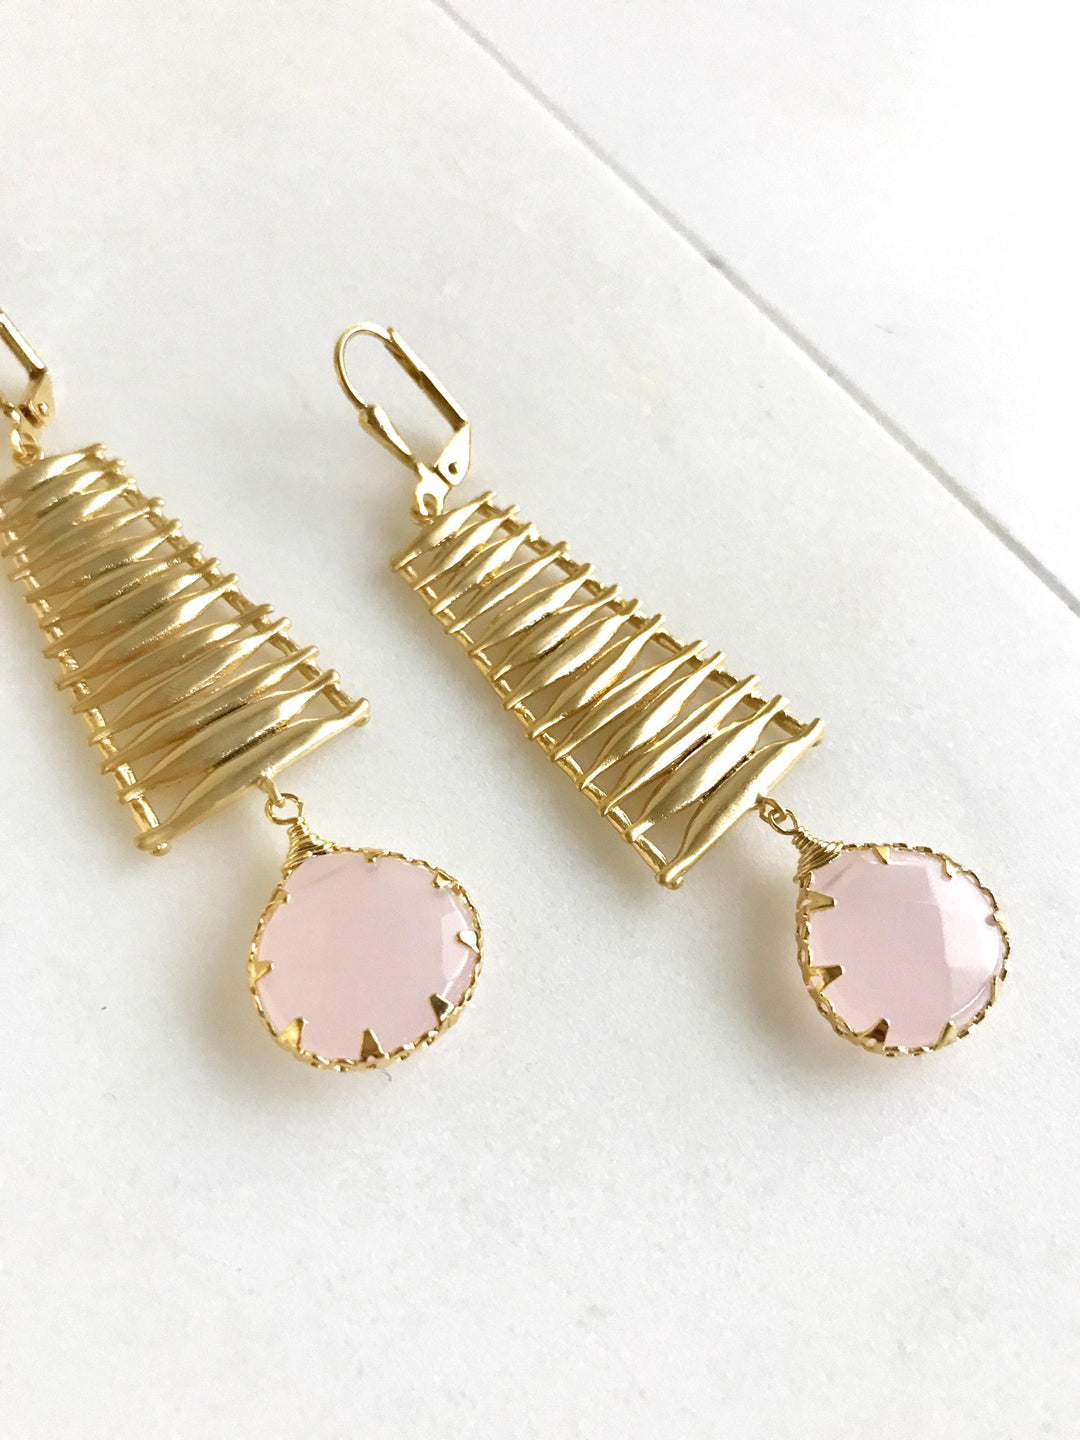 Pink Earrings. Pink Statement Earrings. Gold Statement Earrings. Statement Jewelry. Long Pink Earringa. Jewelry Gift.